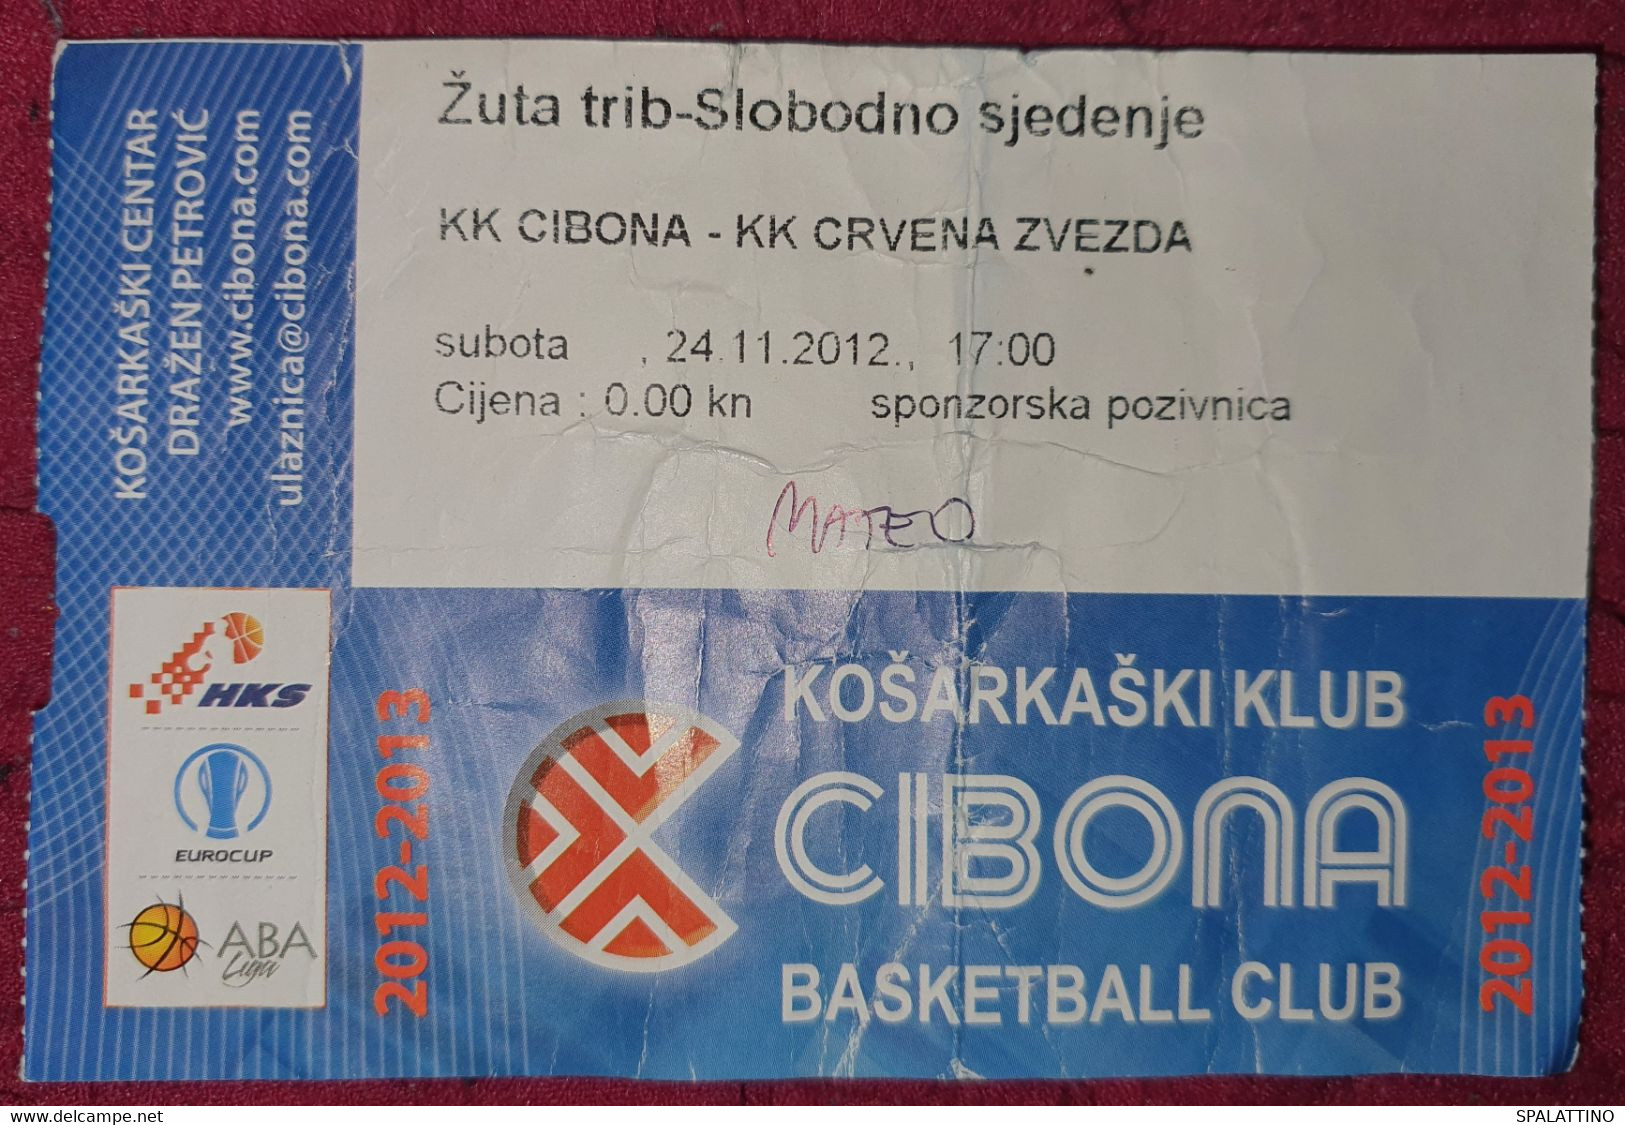 KK CIBONA ZAGREB - KK CRVENA ZVEZDA, ABA LEAGUE 2012/2013, MATCH TICKET - Bekleidung, Souvenirs Und Sonstige